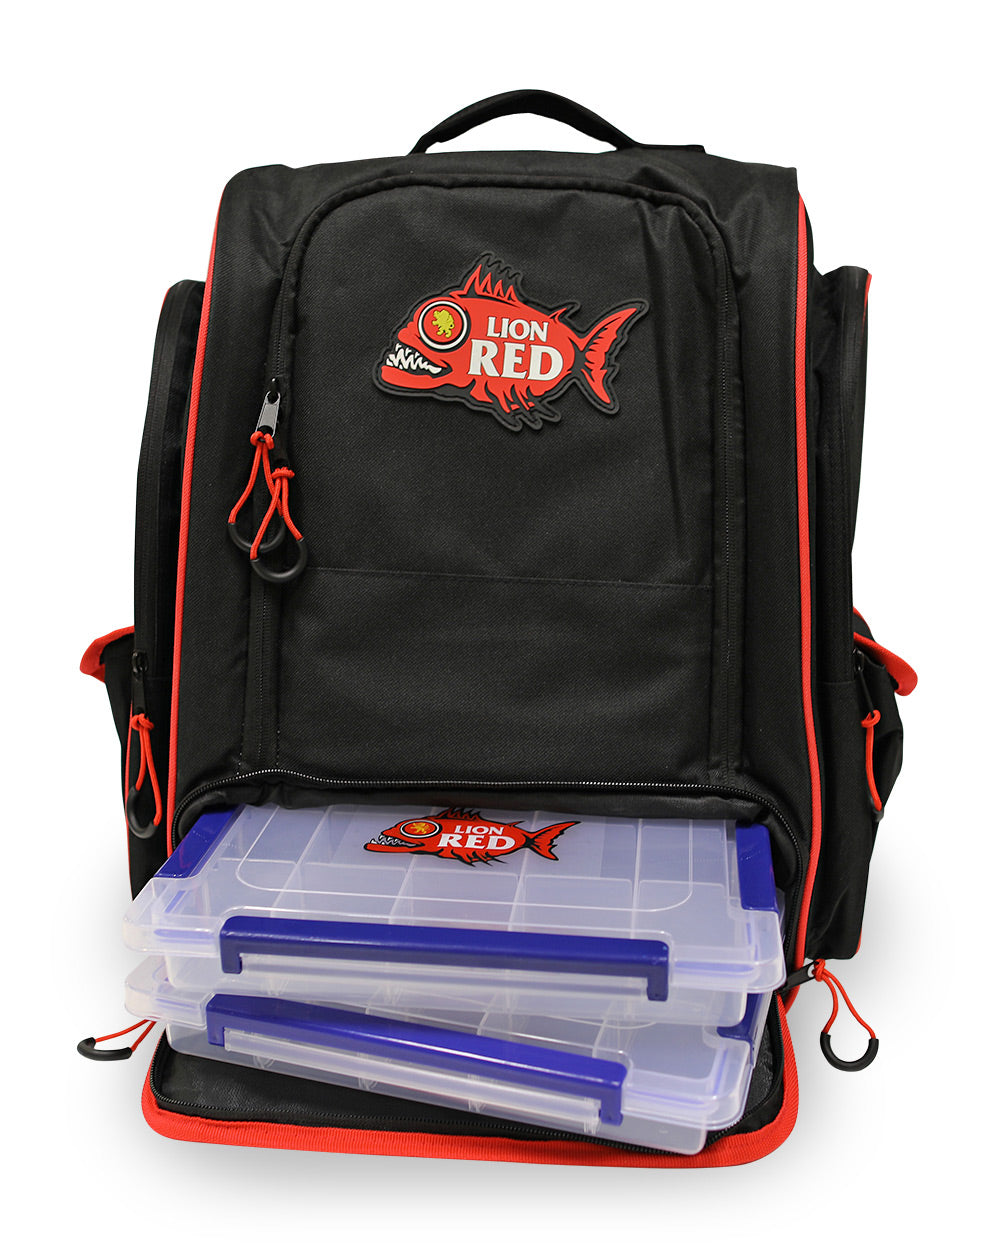 Lion Red Fishing Bag - Beer Gear Apparel & Merchandise